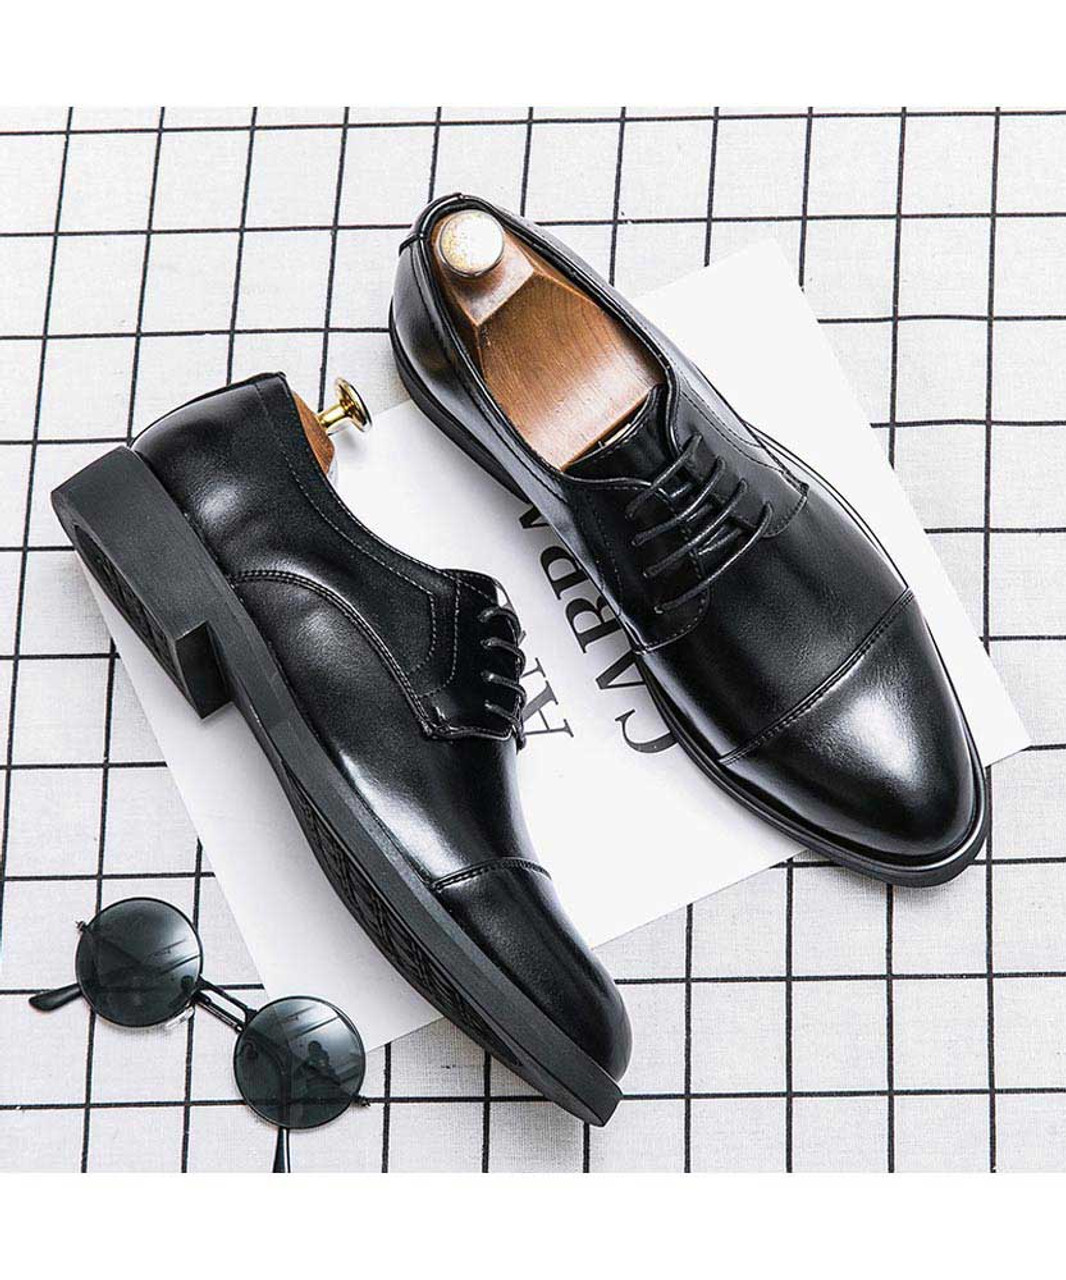 Black derby dress shoe in plain | Mens dress shoes online 2088MS